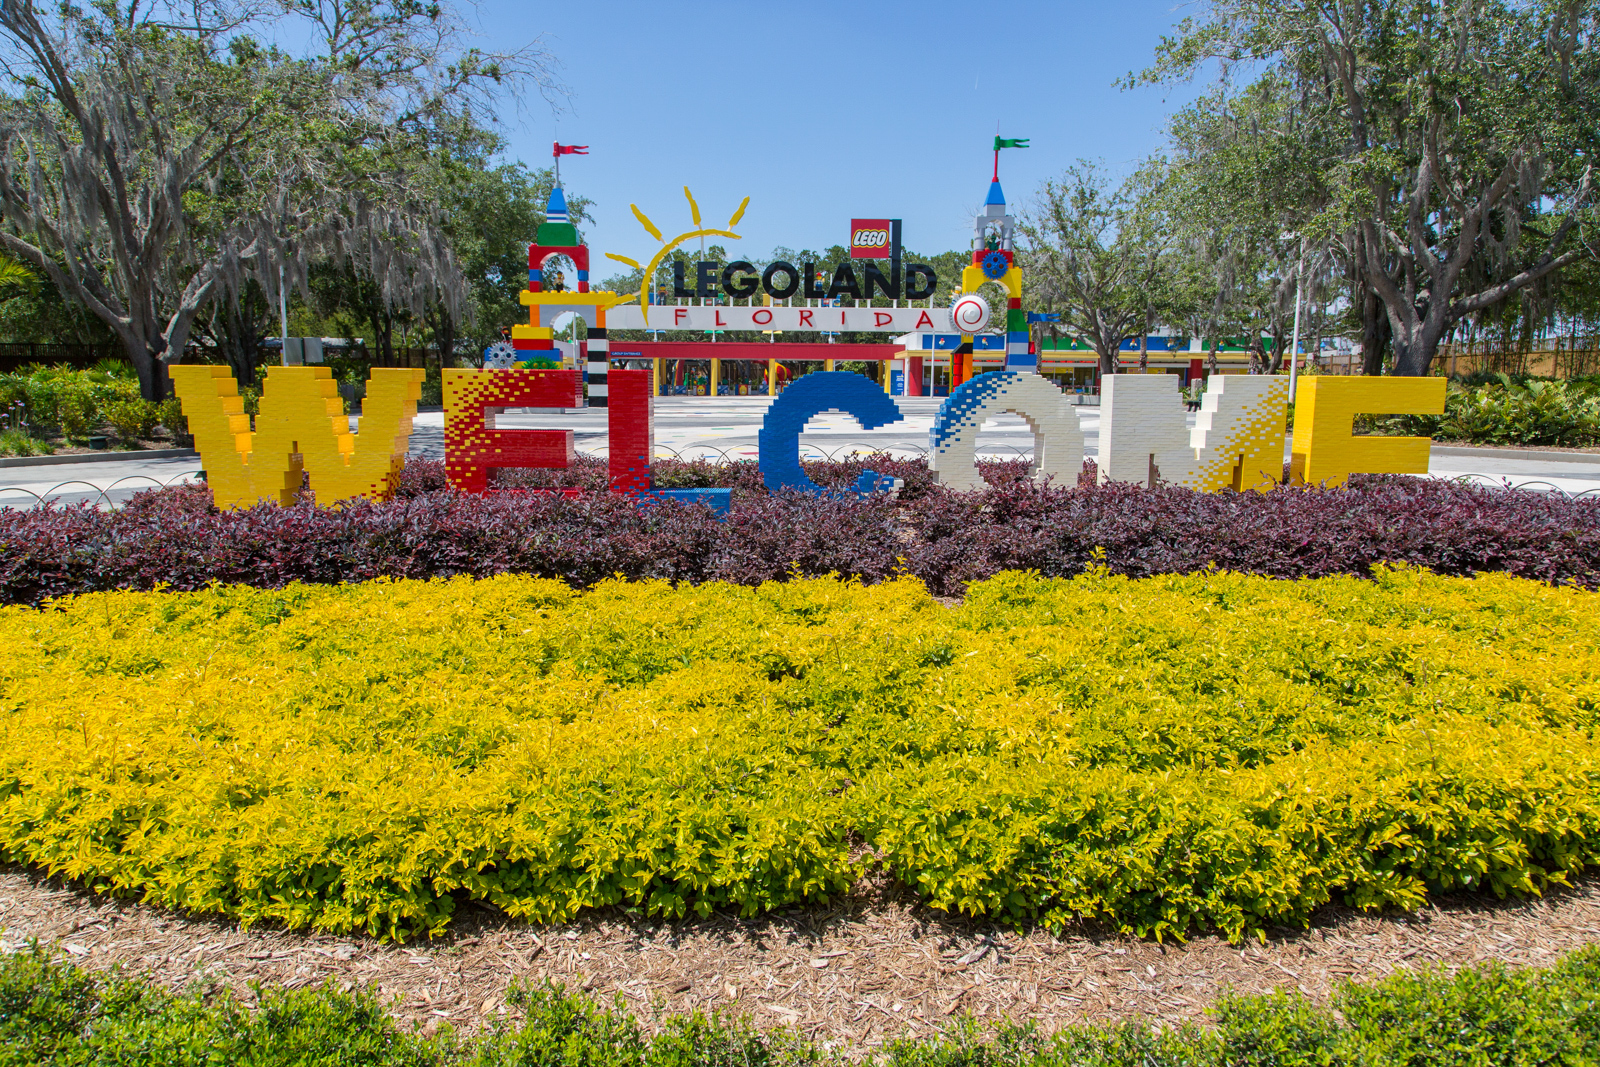 Welcome to Legoland Florida